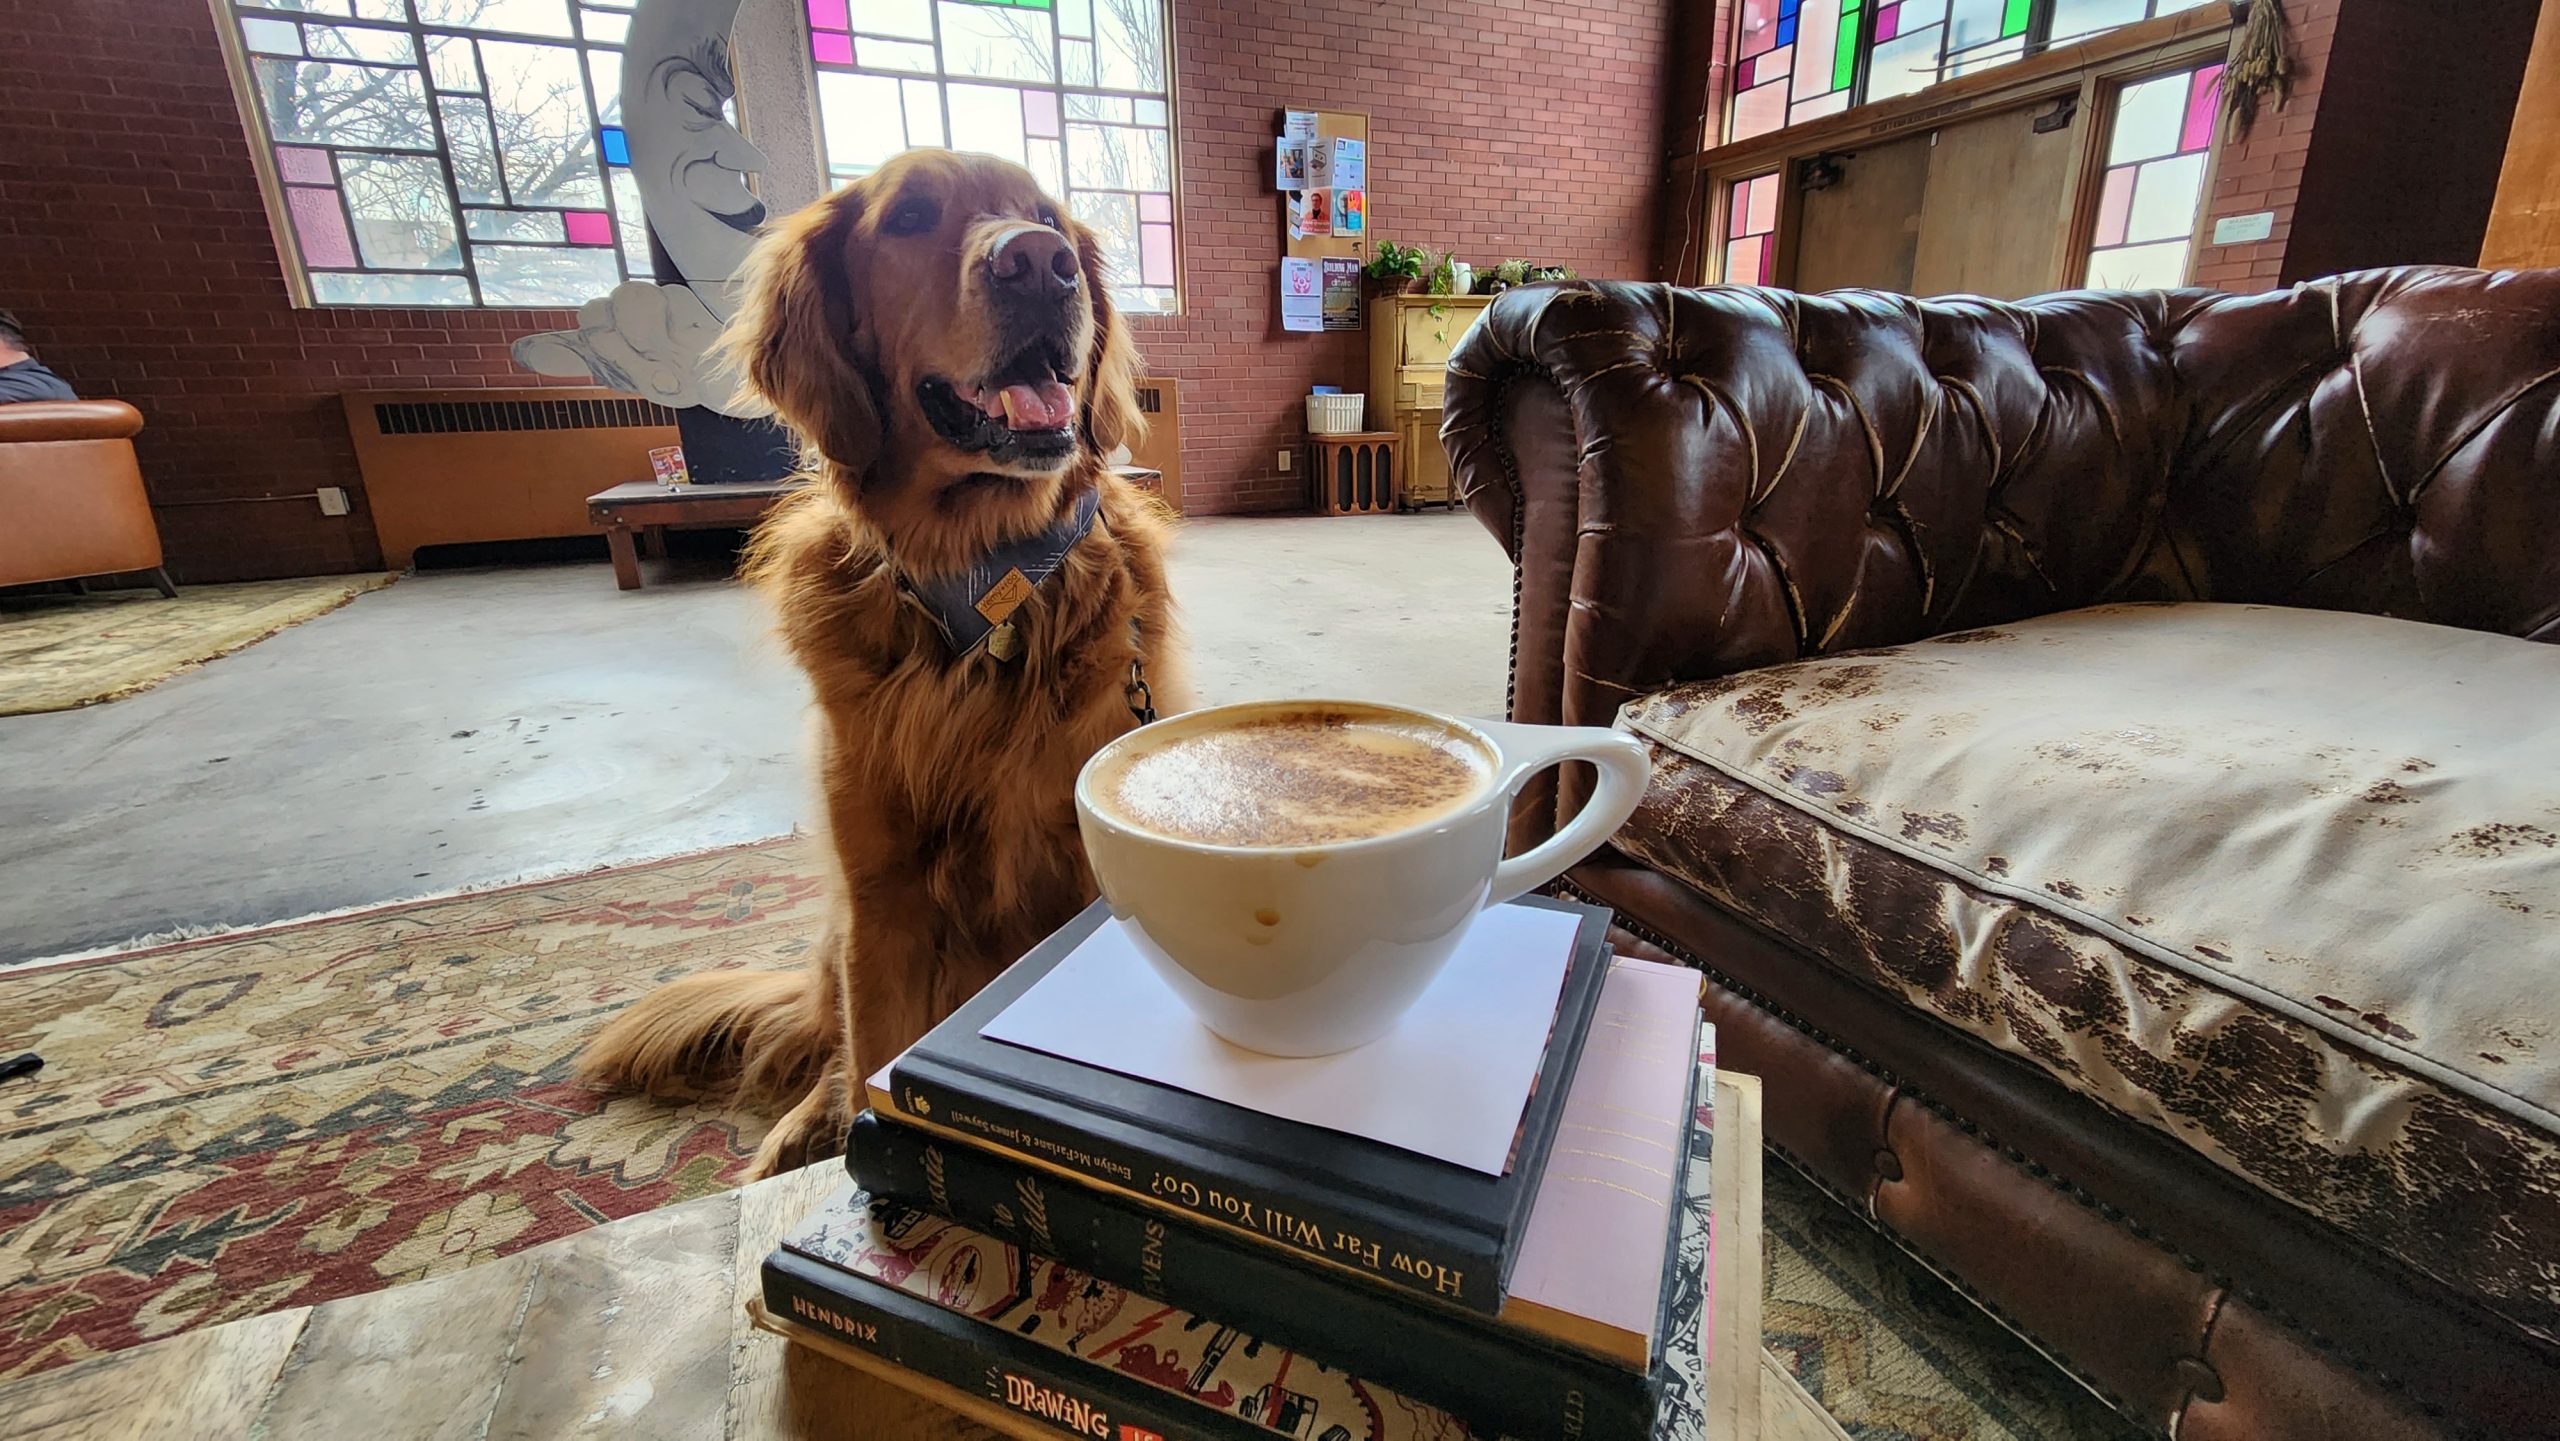 Dog Friendly Coffee Shops San Jose, CA - Last Updated December